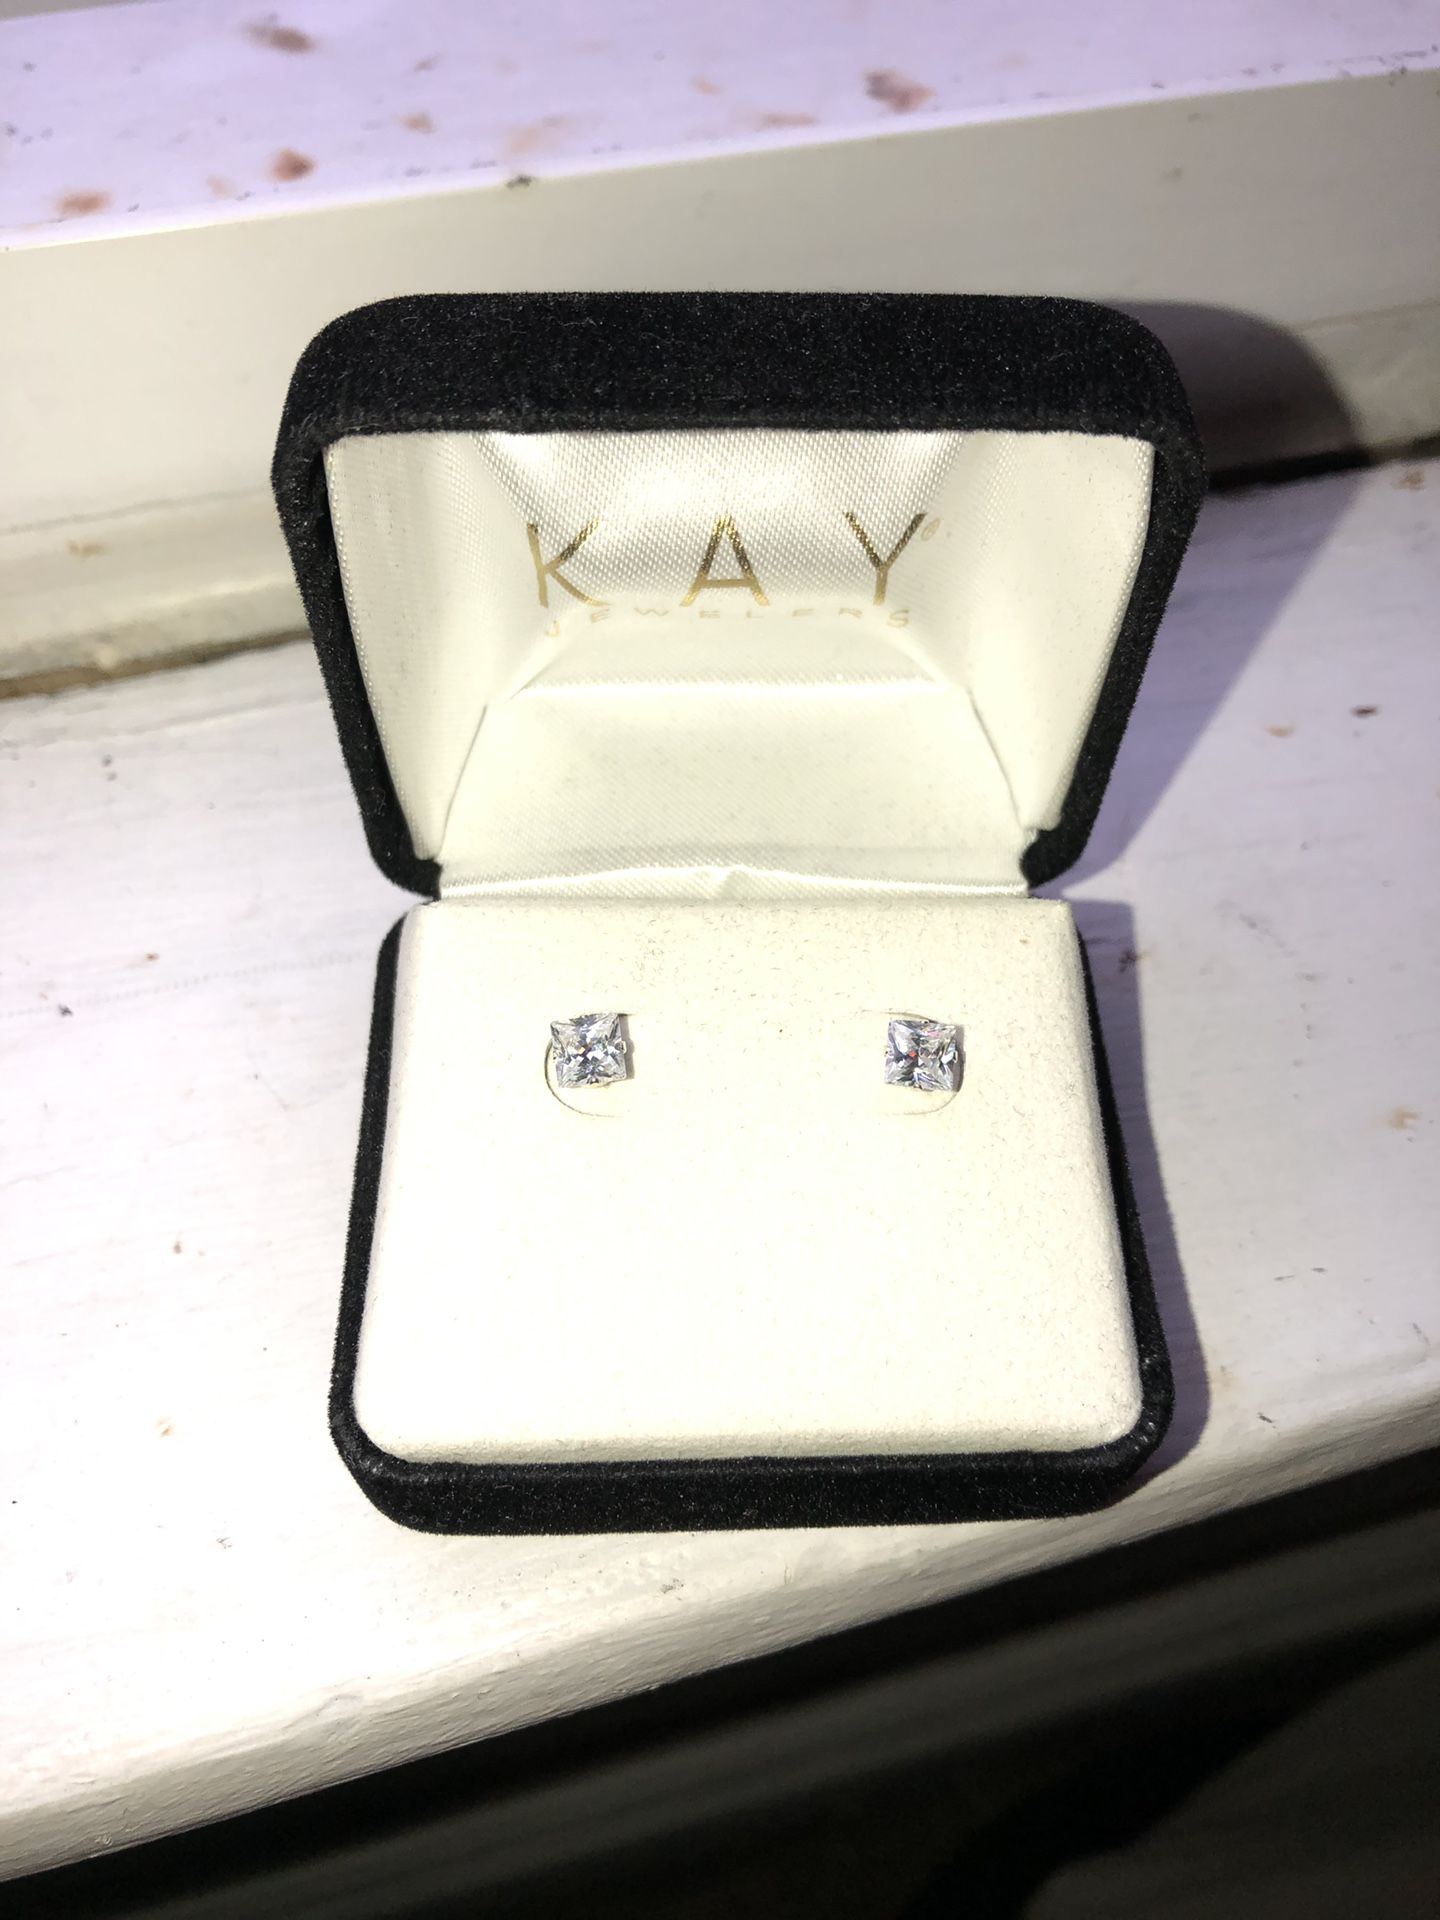 Diamond earrings from Kay jewelers hmu